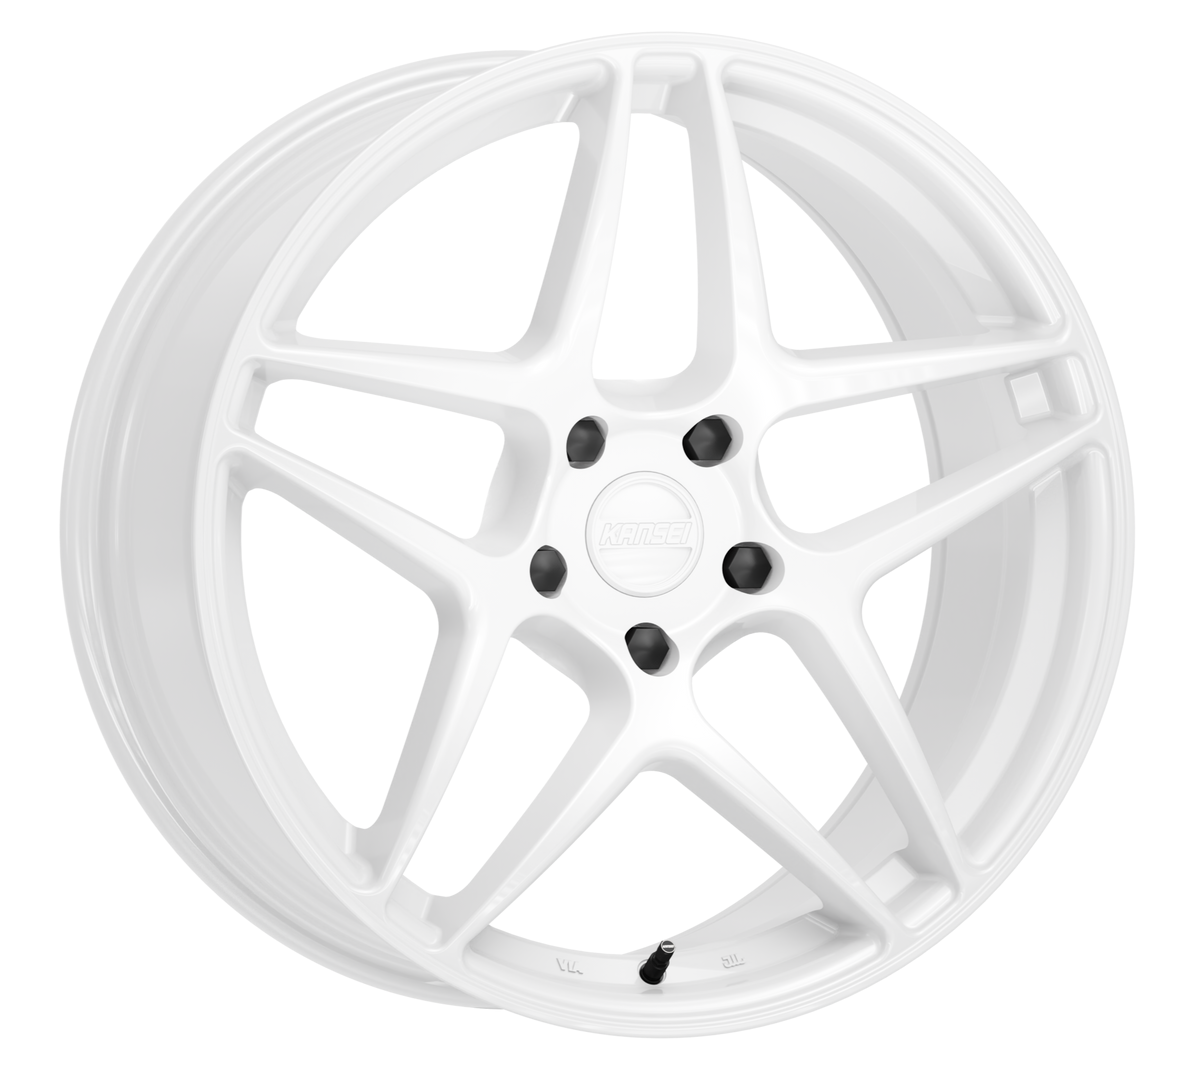 K15W ASTRO Wheel, Size: 19" x 9.50", Bolt Pattern: 5 x 114.300 mm, Backspace: 6.12" [Finish: Gloss White]